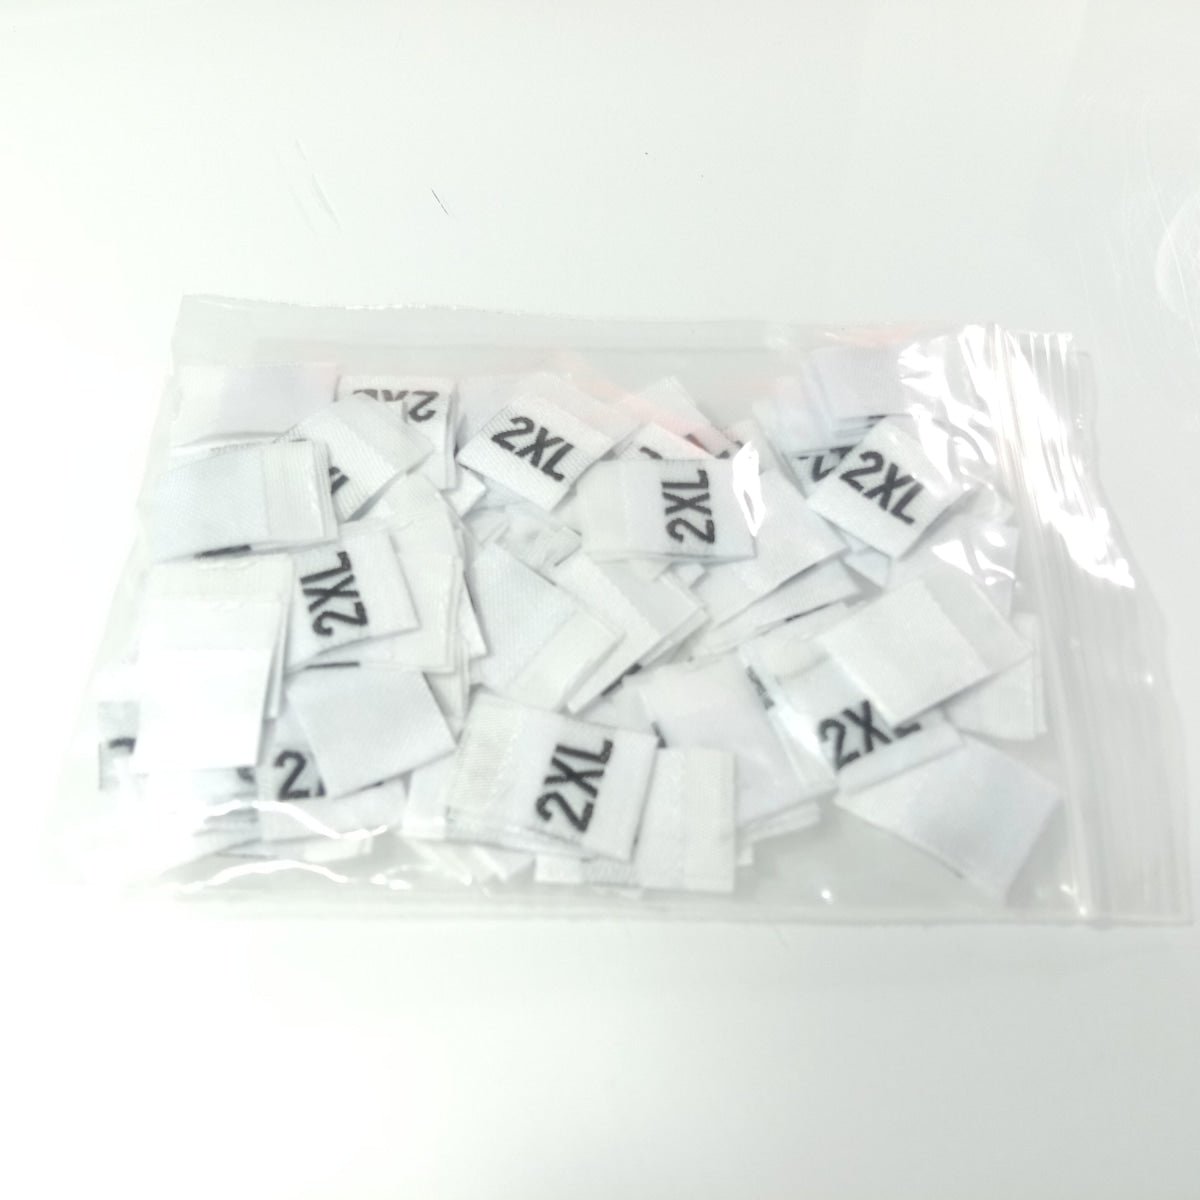 100pcs Clothing Size Label Tags XS S M L XL 2XL 3XL 4XL Black Text White Garment Clothes T Shirt Dress Fabric - S white - Asia Sell